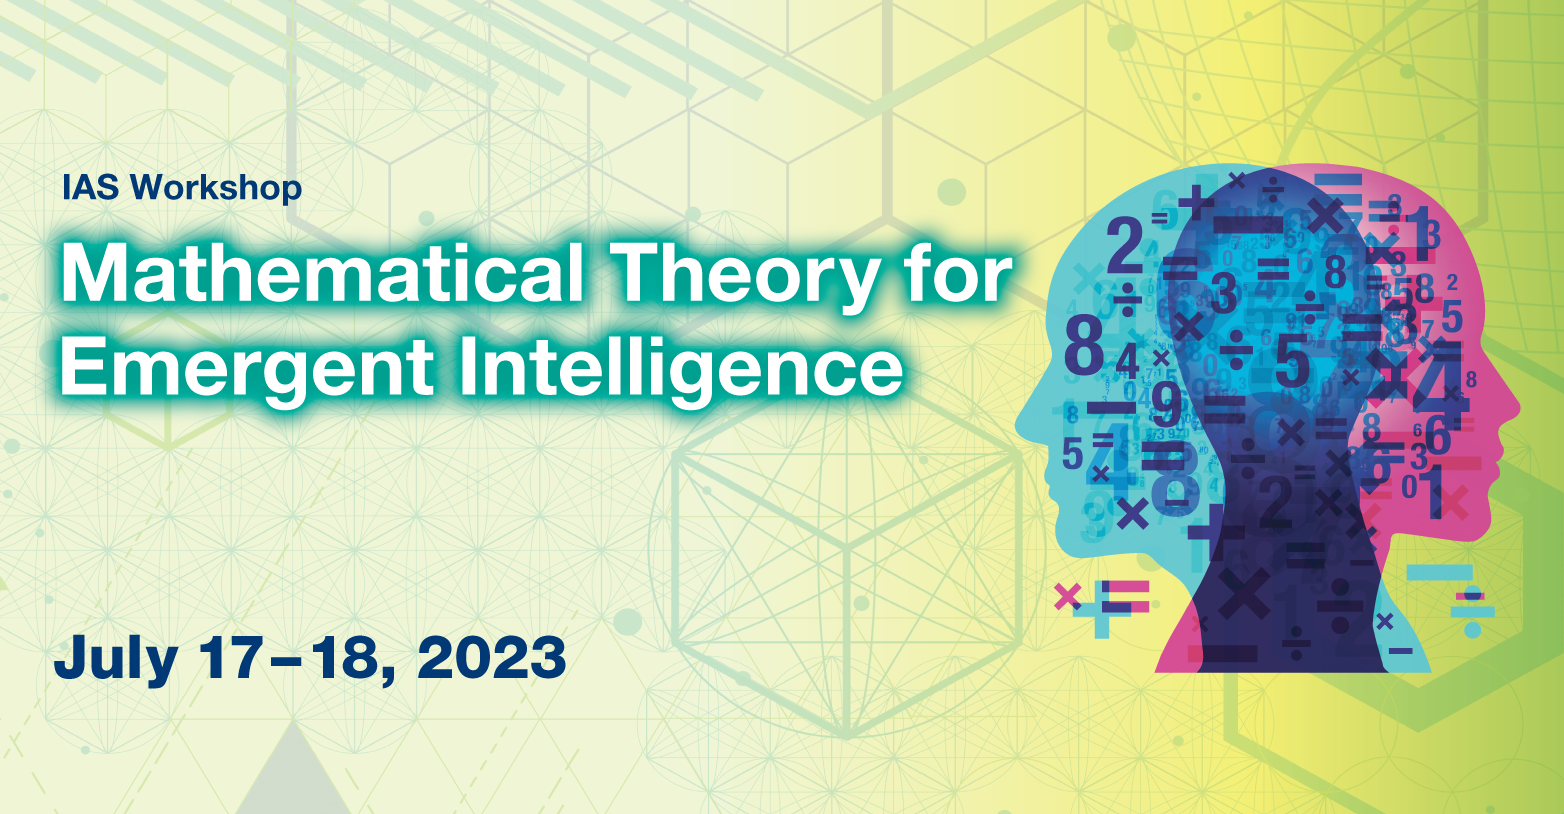 IAS Workshop on Mathematical Theory for Emergent Intelligence (July 17 - 18, 2023)